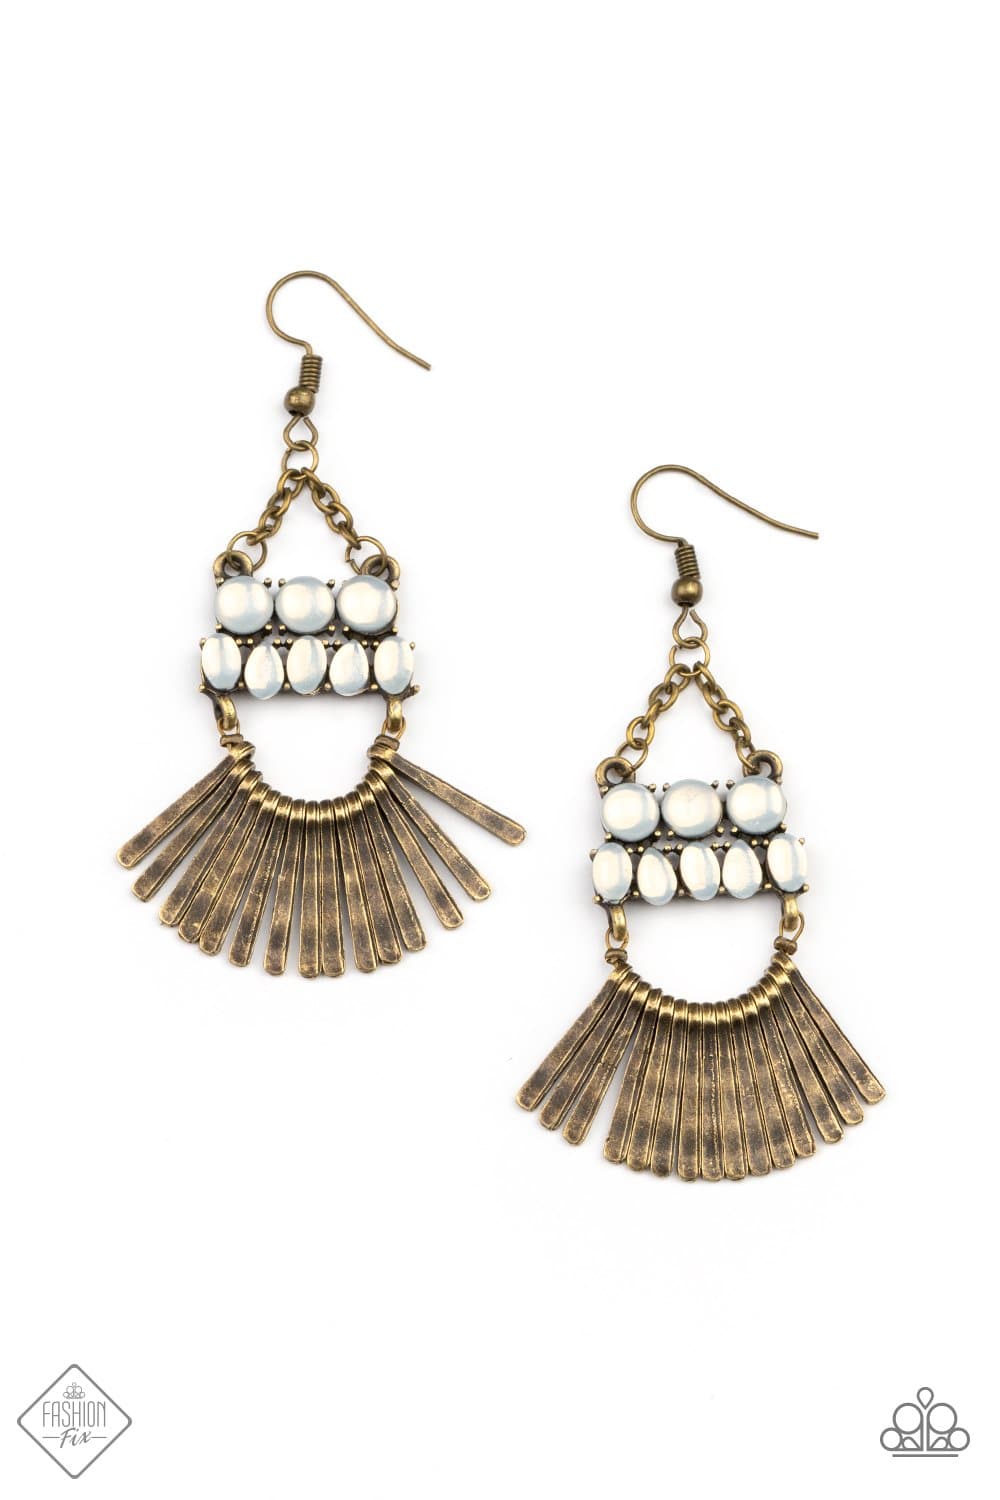 A FLARE For Fierceness - Brass Earrings - Paparazzi Accessories - GlaMarous Titi Jewels